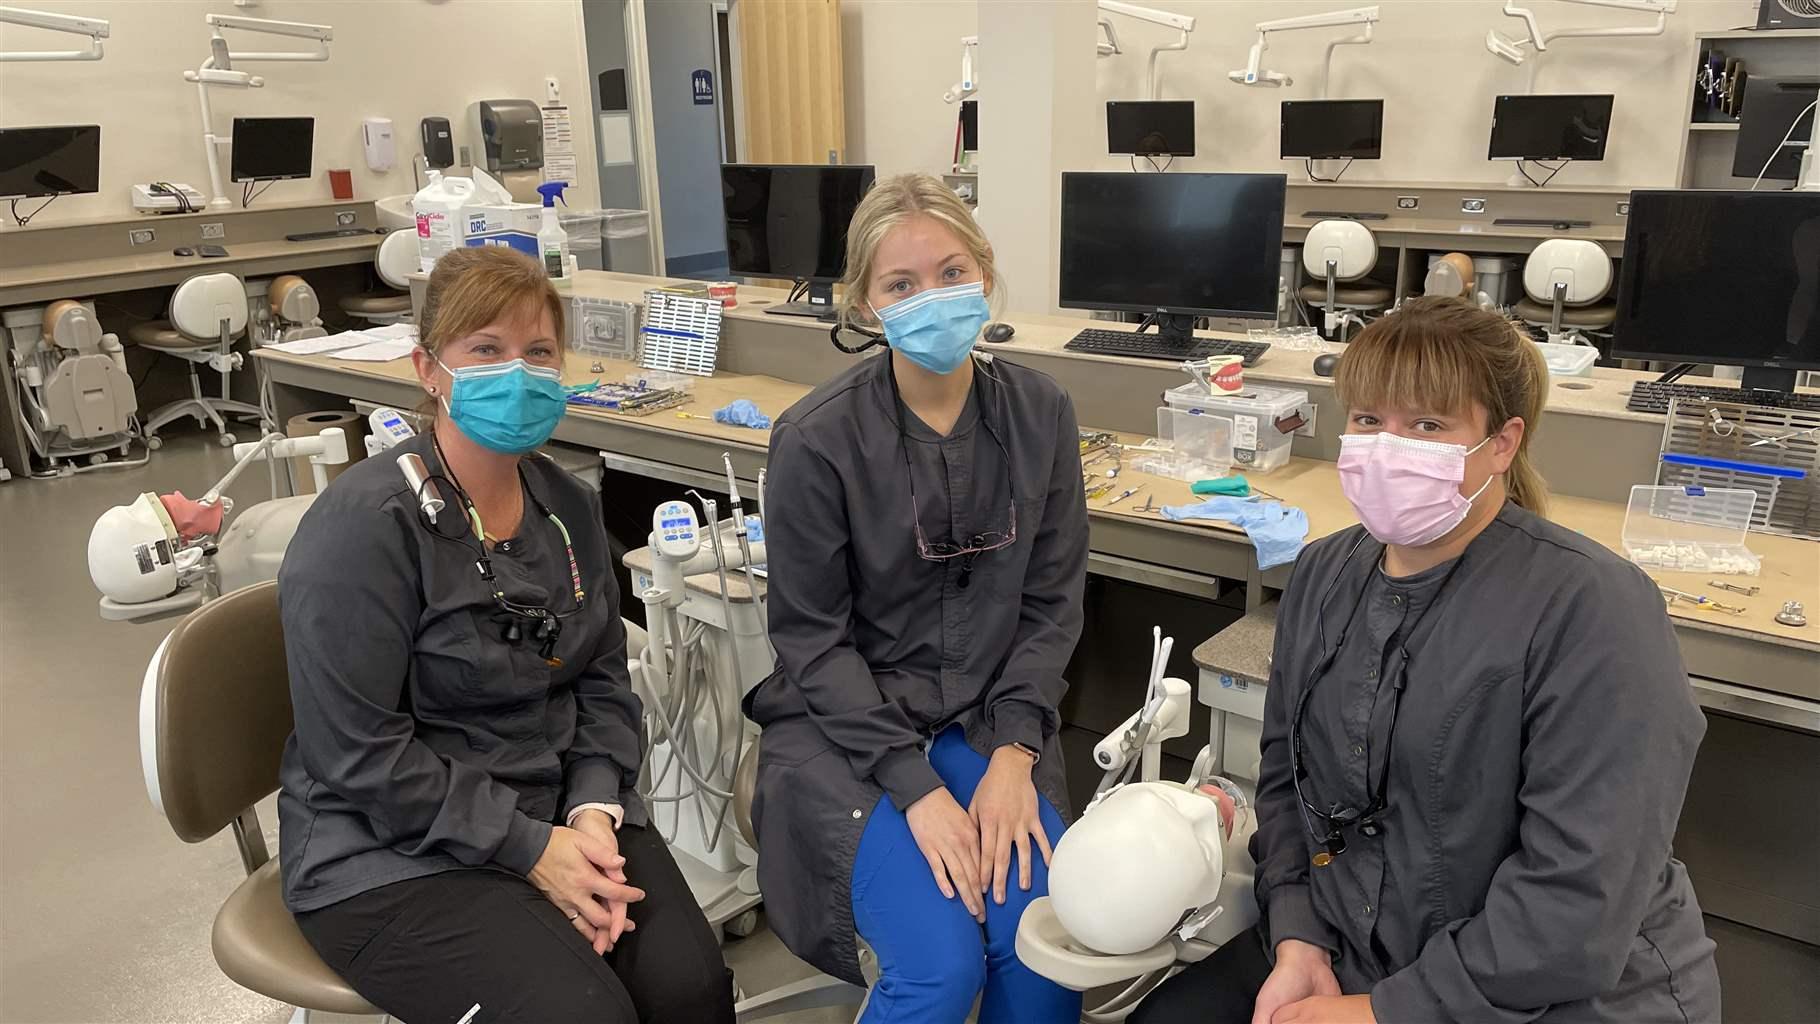 Dental therapy students Amanda Weyek, Rachel Wangen, and Cindy Degner, left to right, in the Minnesota State University-Mankato Dental Simulation Lab.